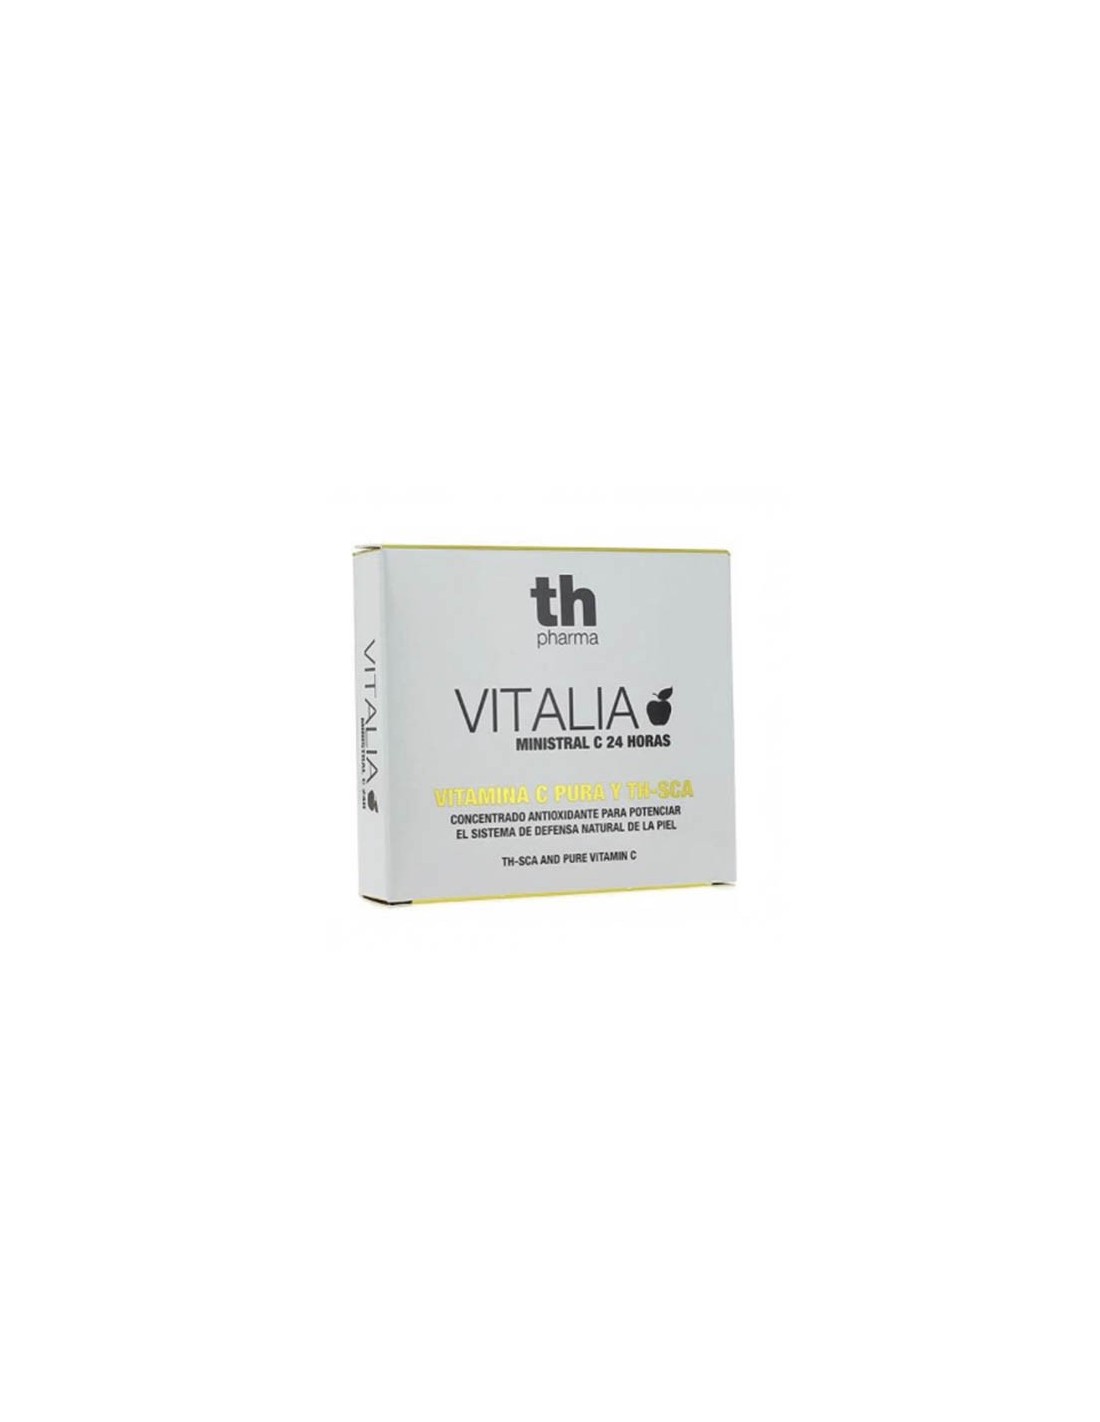 Th Pharma Antioxidante Vitamina-C Ministral Vitalia 5x2ml